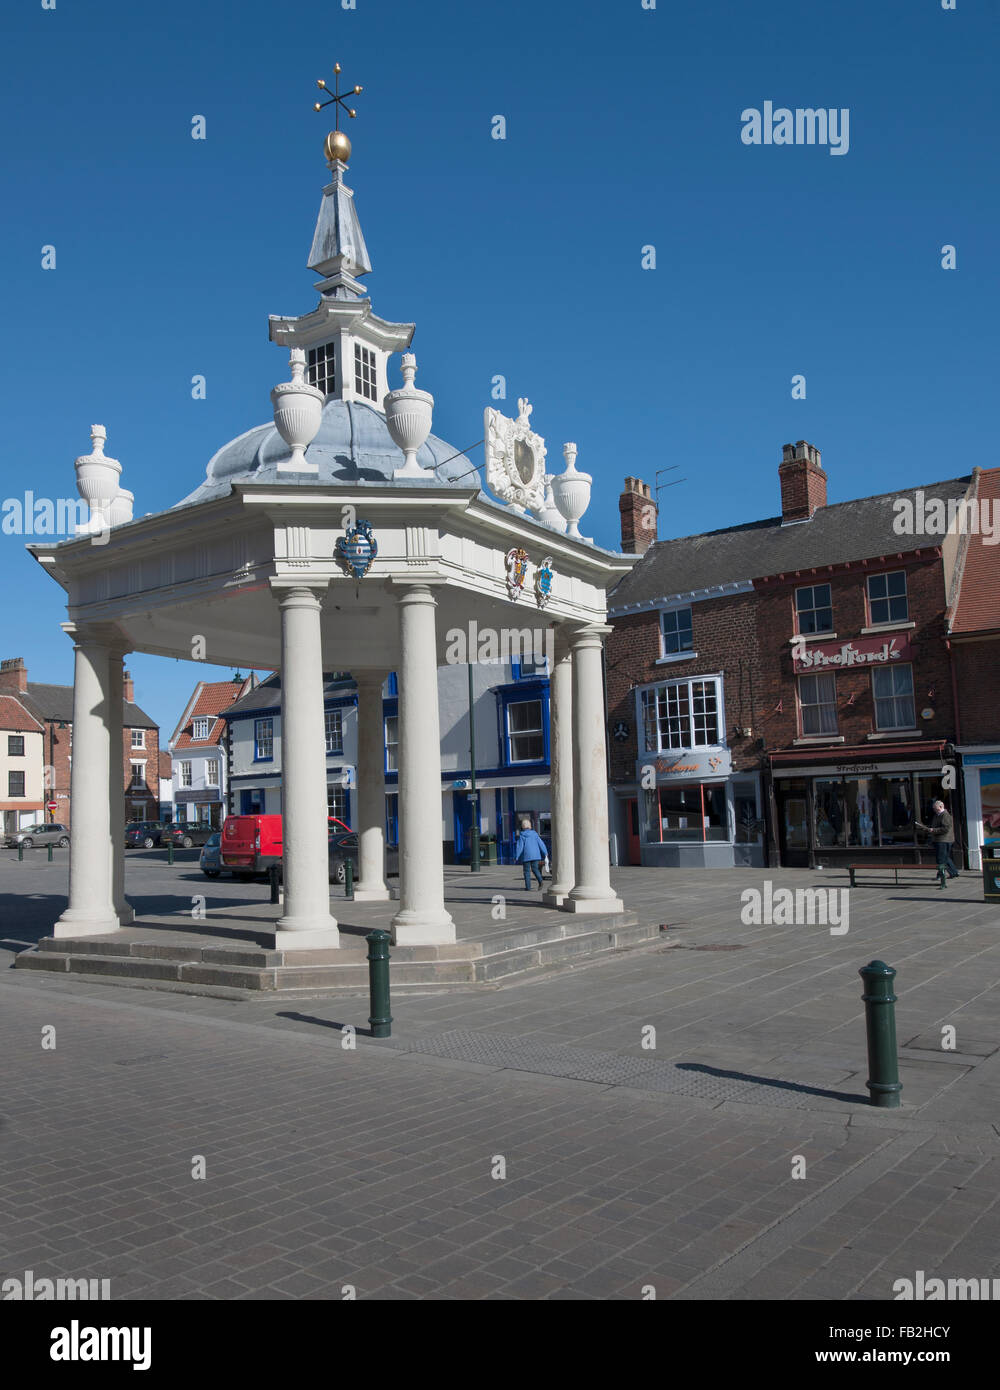 Beverley Bandstand, Market Place, Beverley, Yorkshire, England, UK. Stock Photo